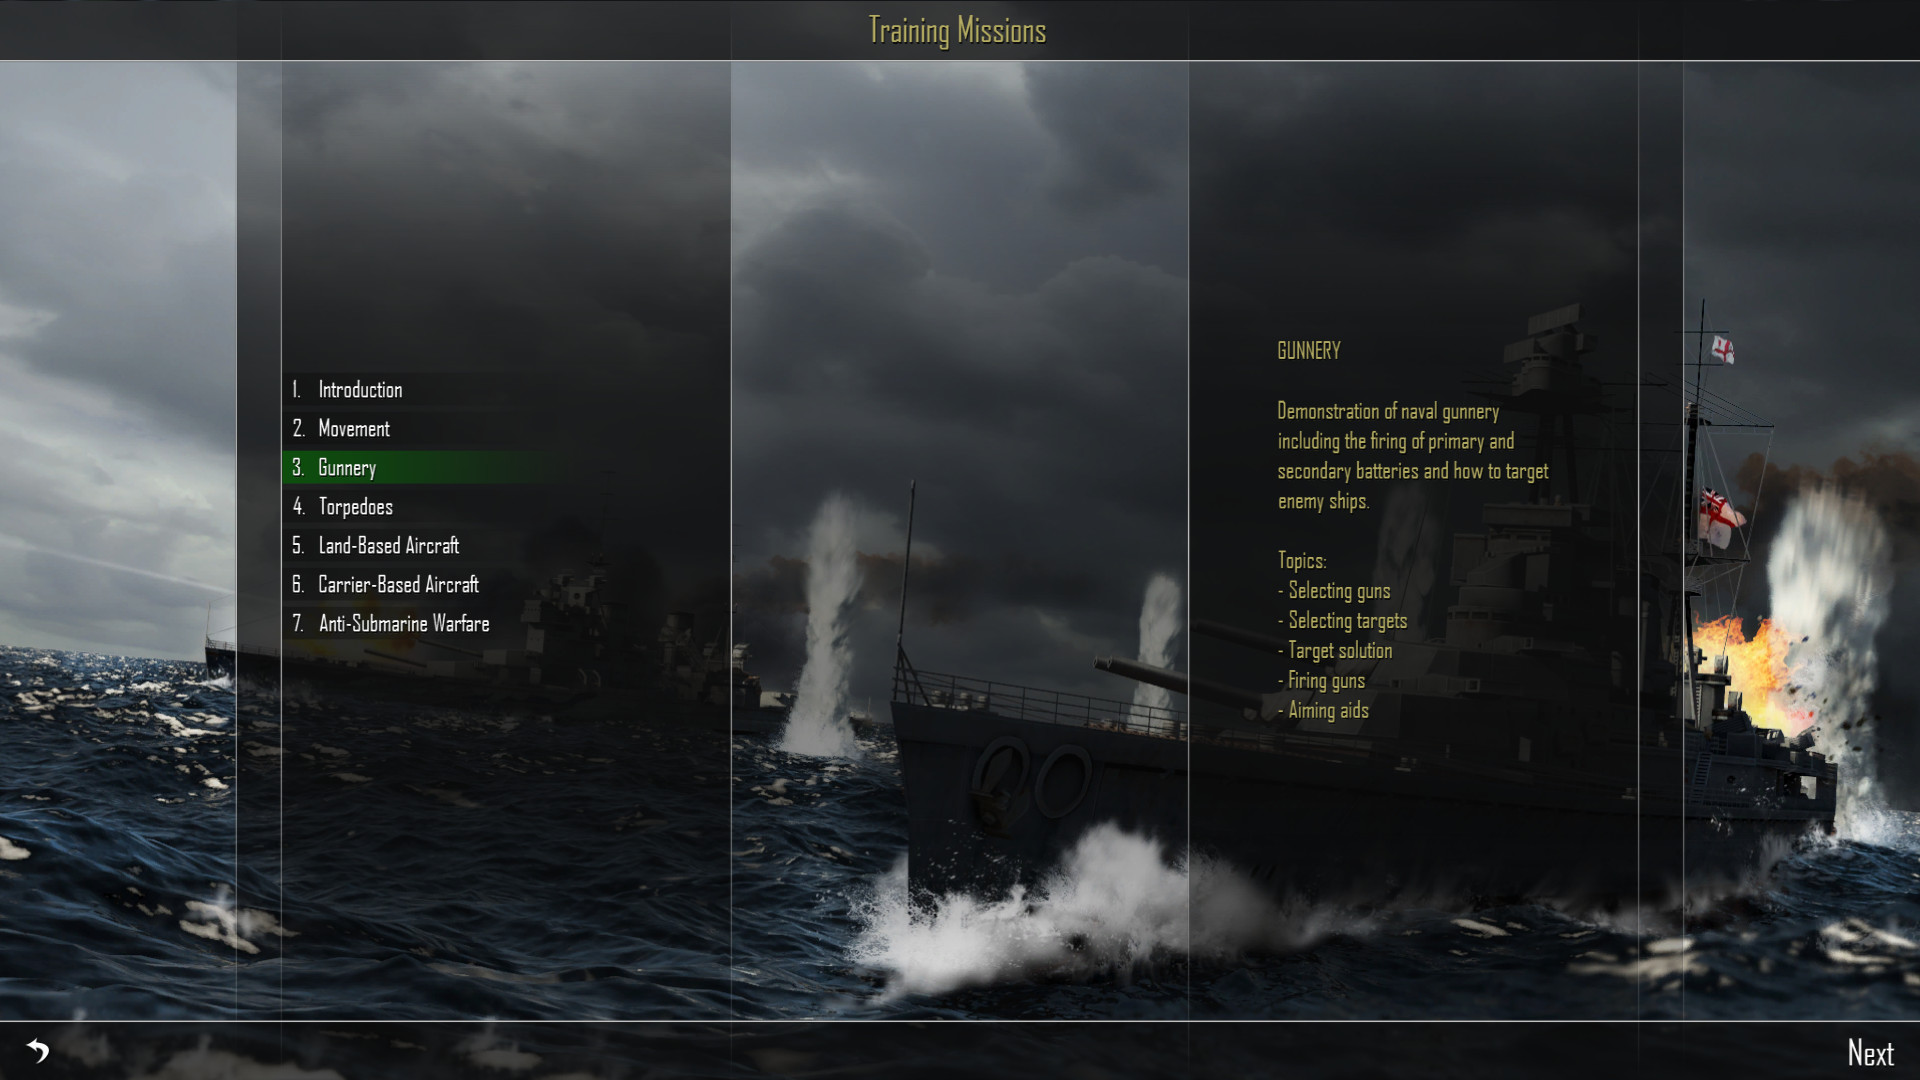 Atlantic Fleet screenshot